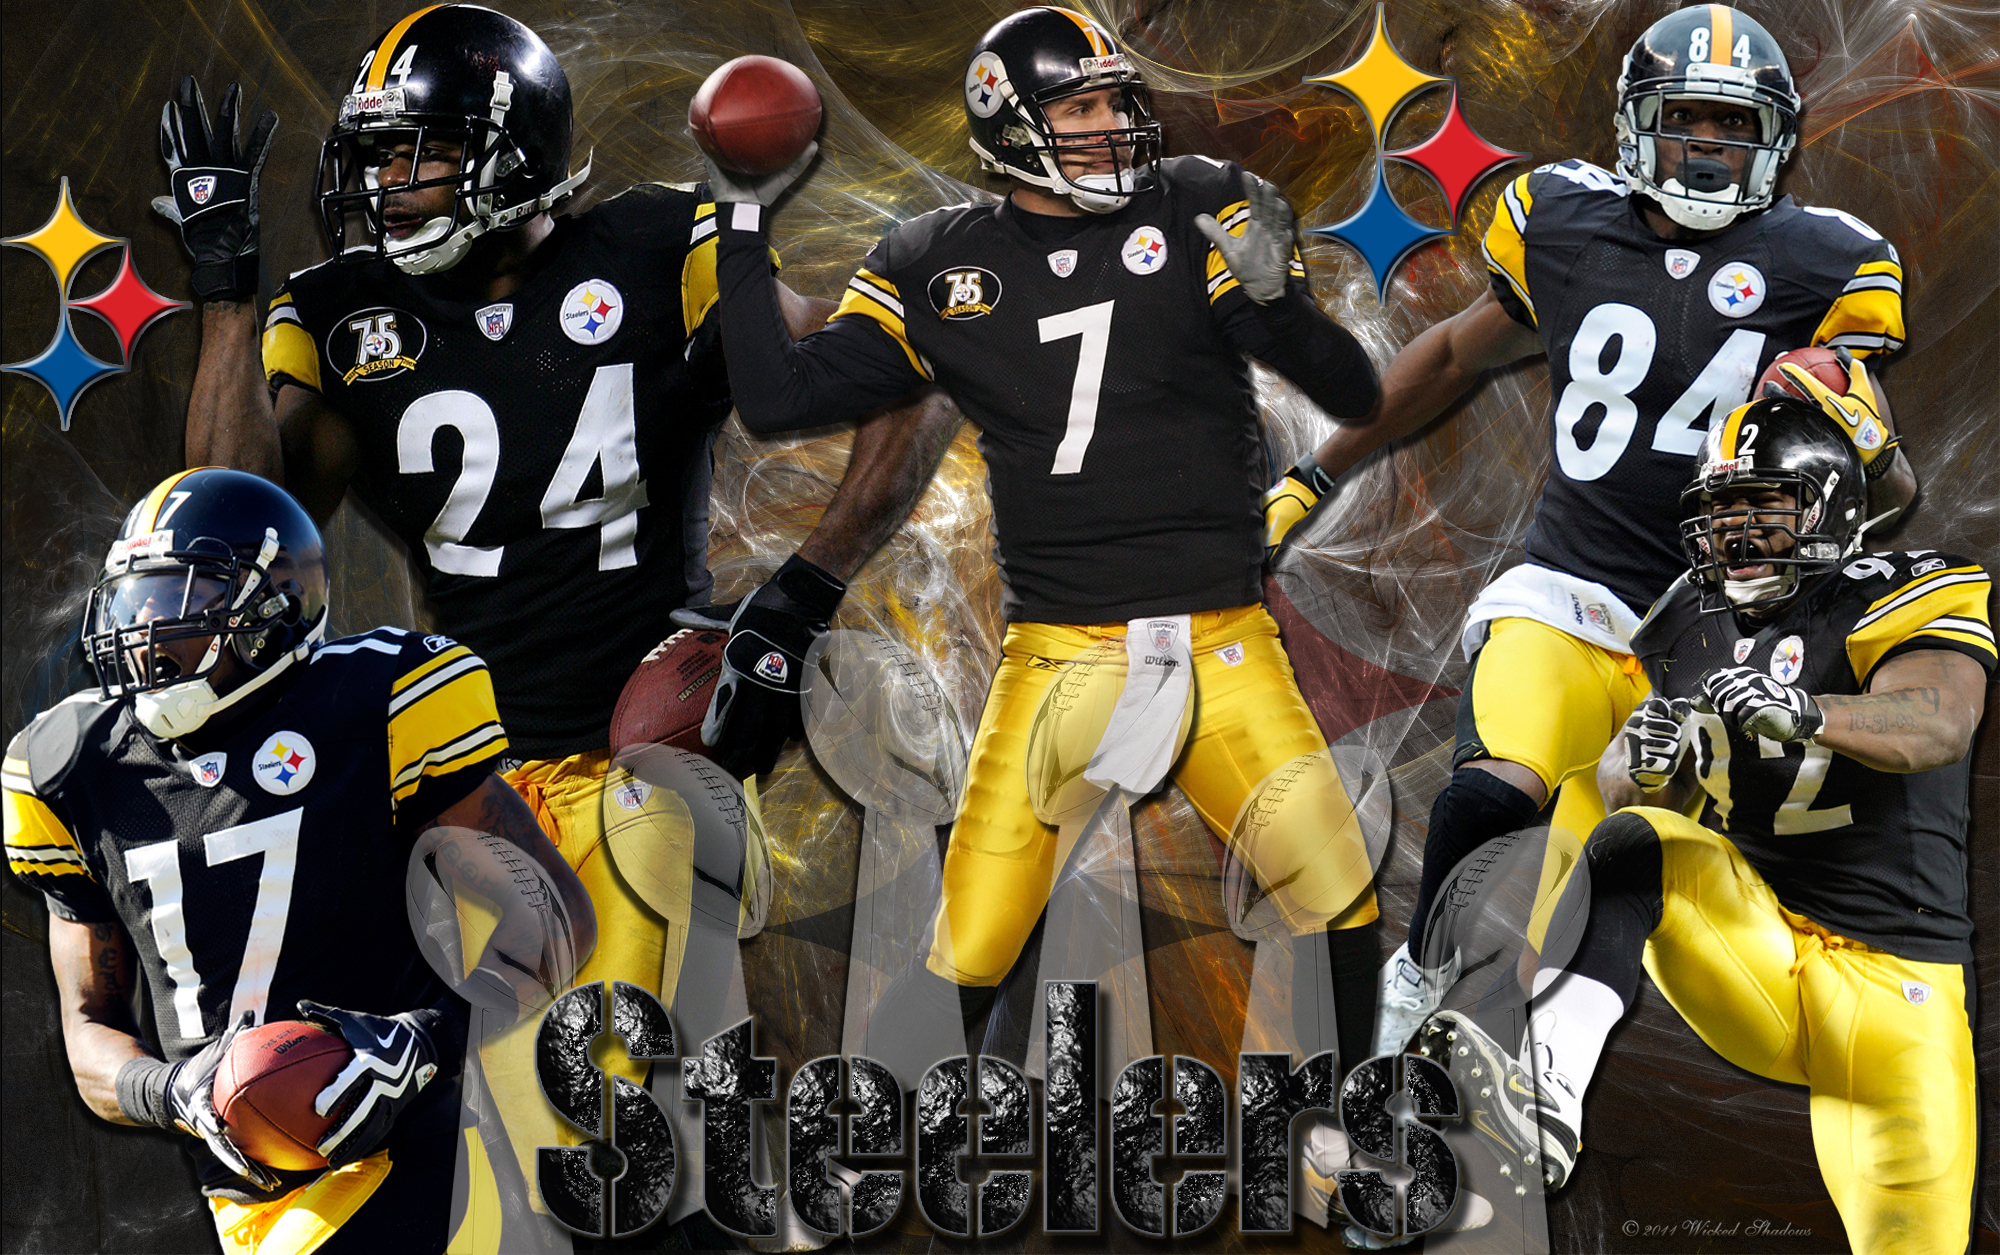 Steelers Backgrounds Image Gallery - Photonesta